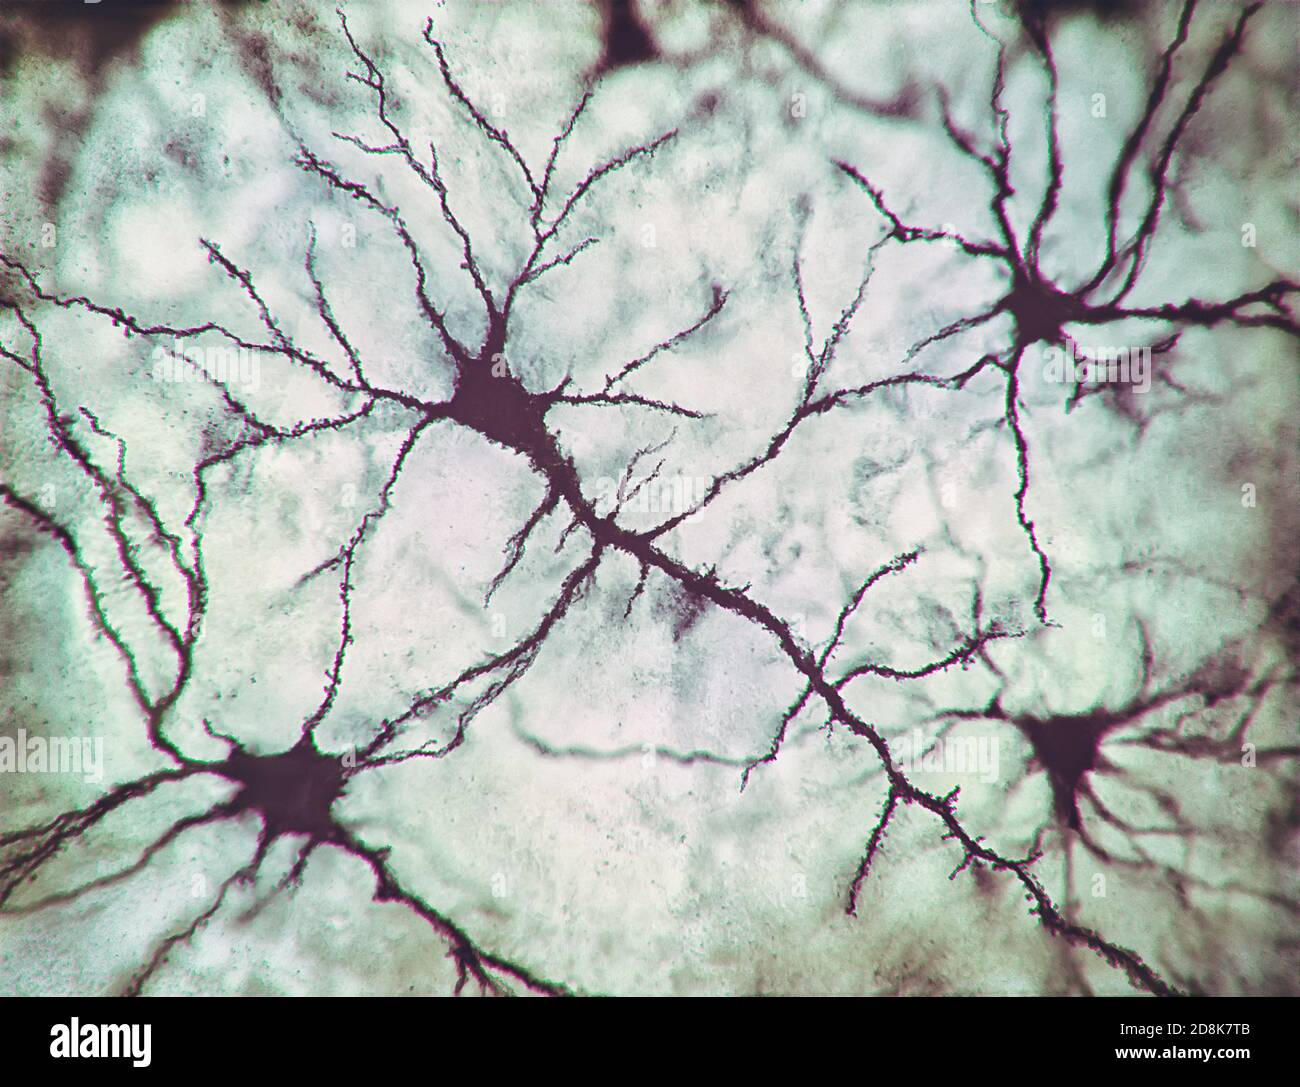 Nerve cells, illustration. Stock Photo